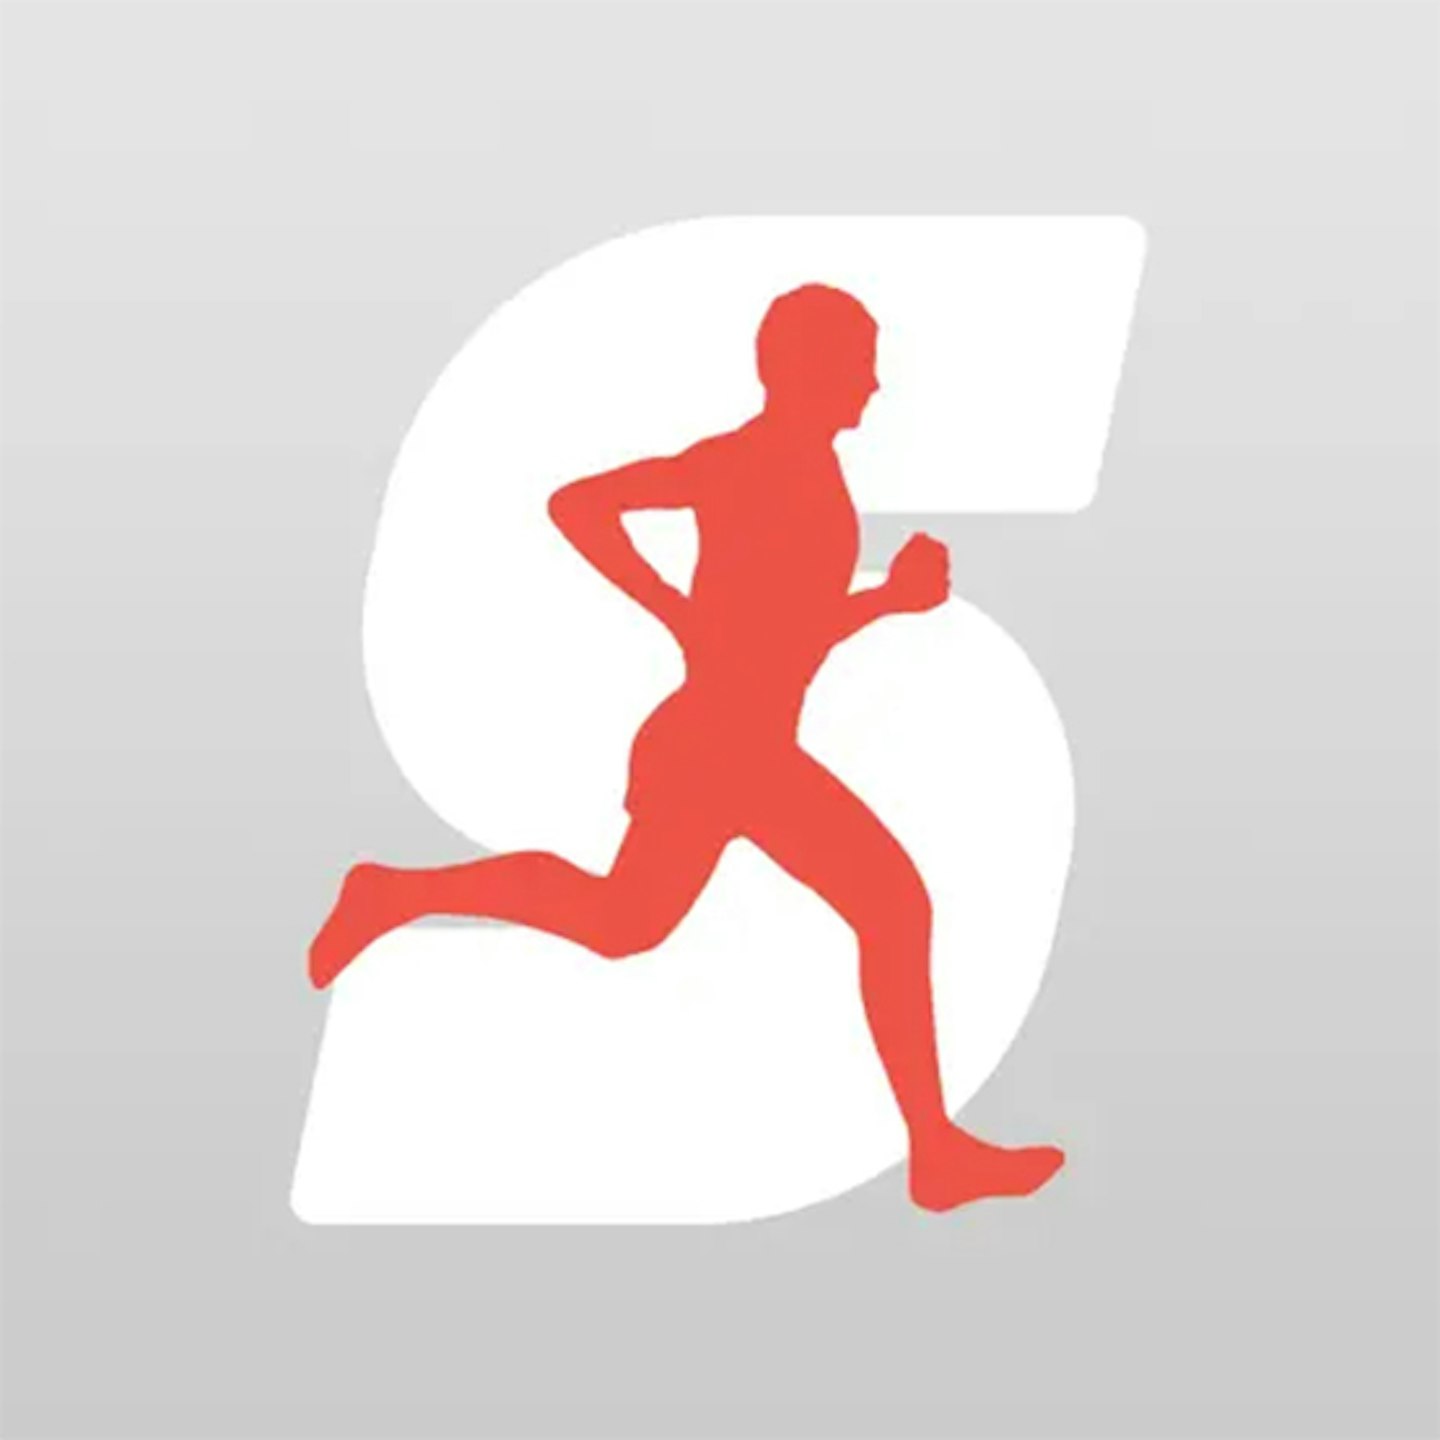 Sports tracker app